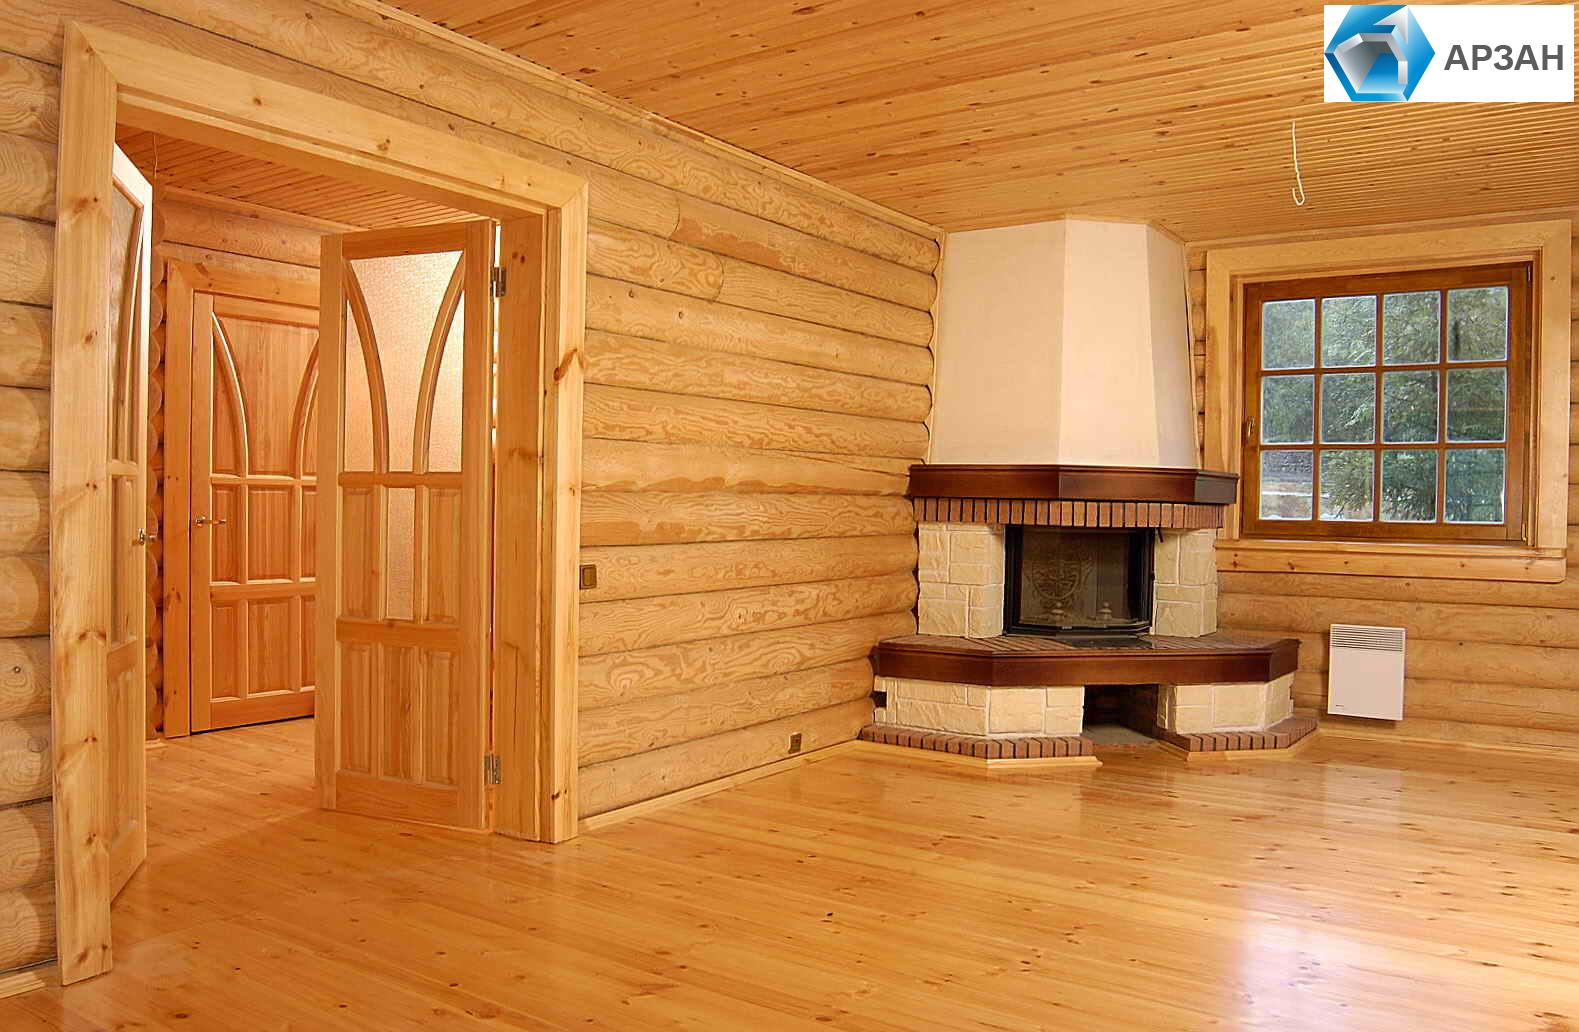 Отделка деревянного дома внутри и снаружи, фото.